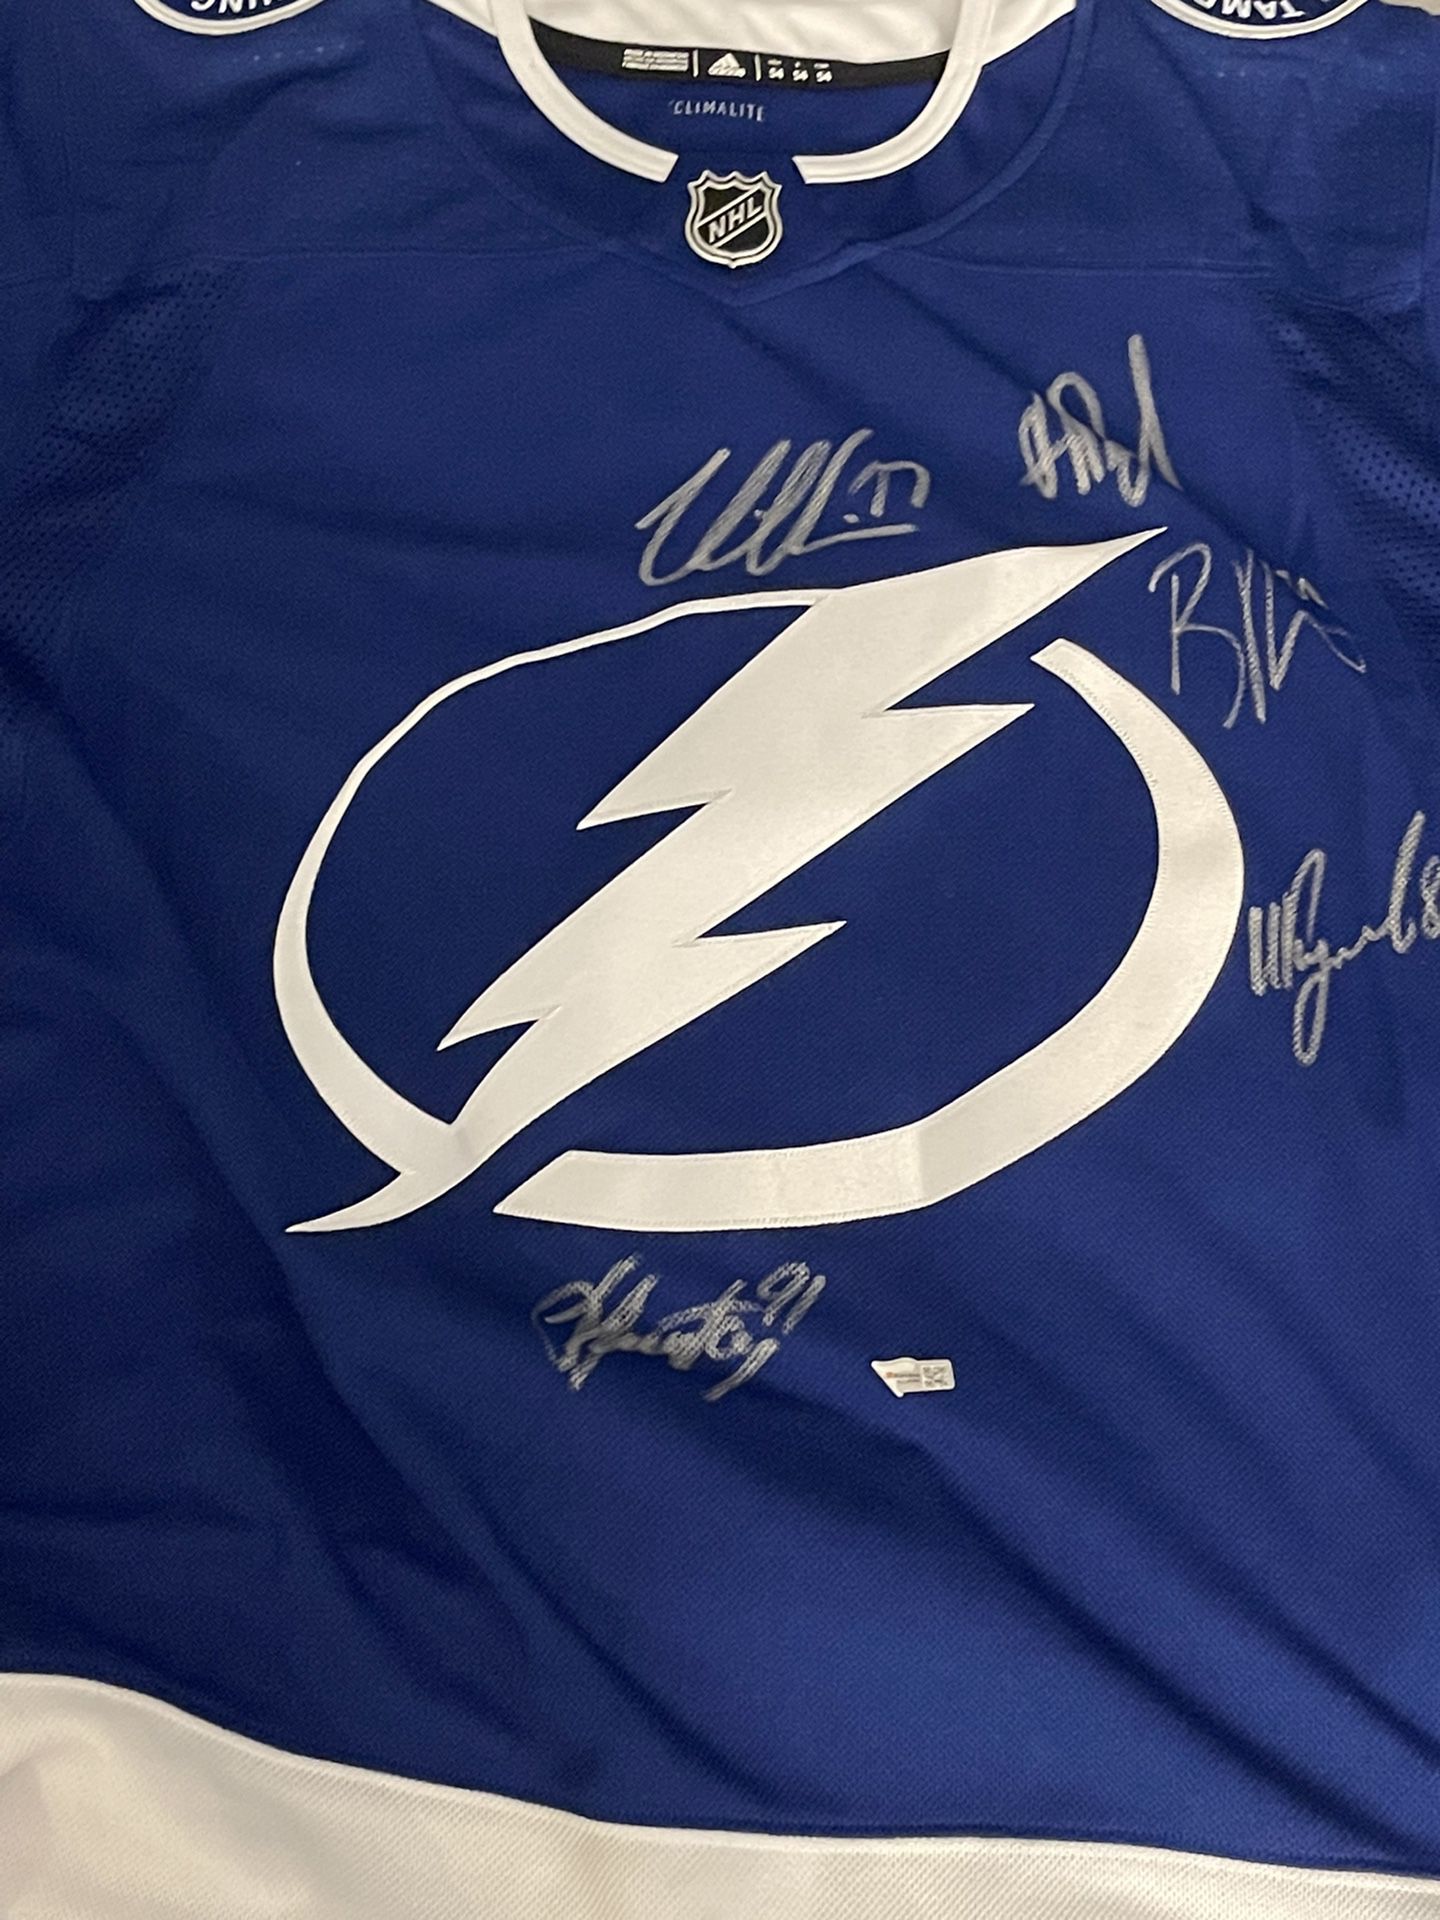 Tampa Bay Lightning - Autographed Jerseys